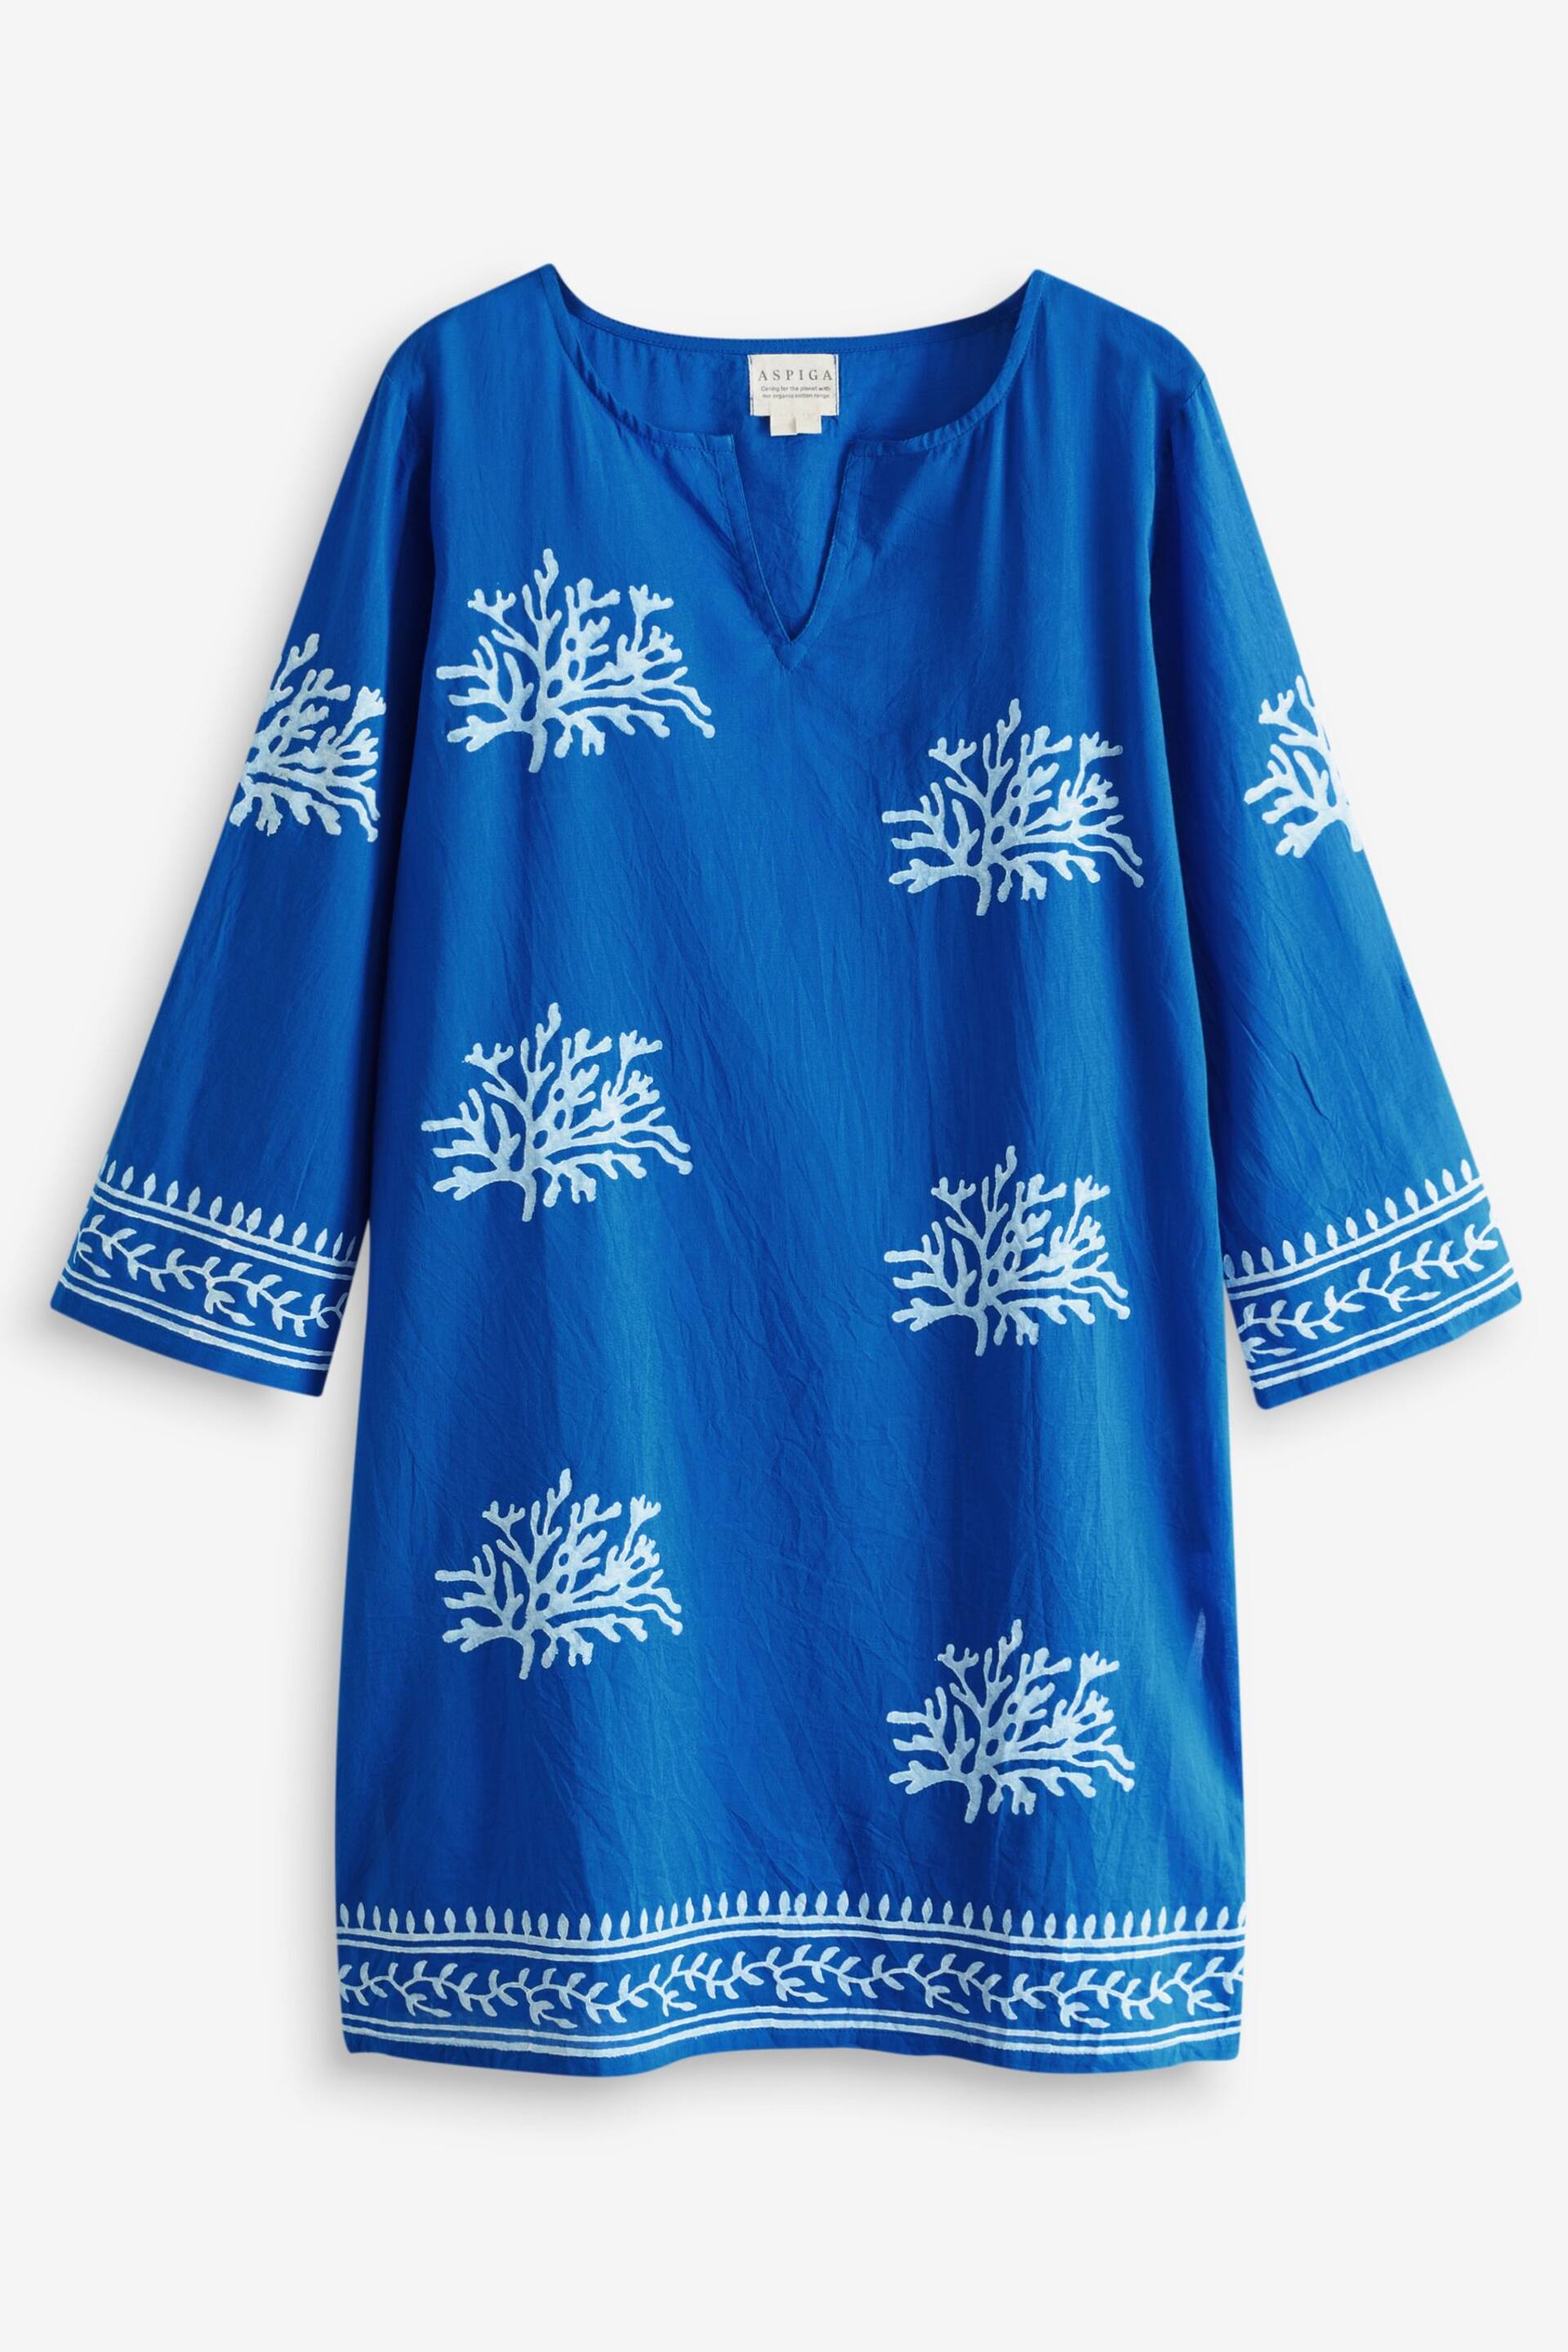 Aspiga Blue Guadalupe Short Tunic - Image 4 of 4